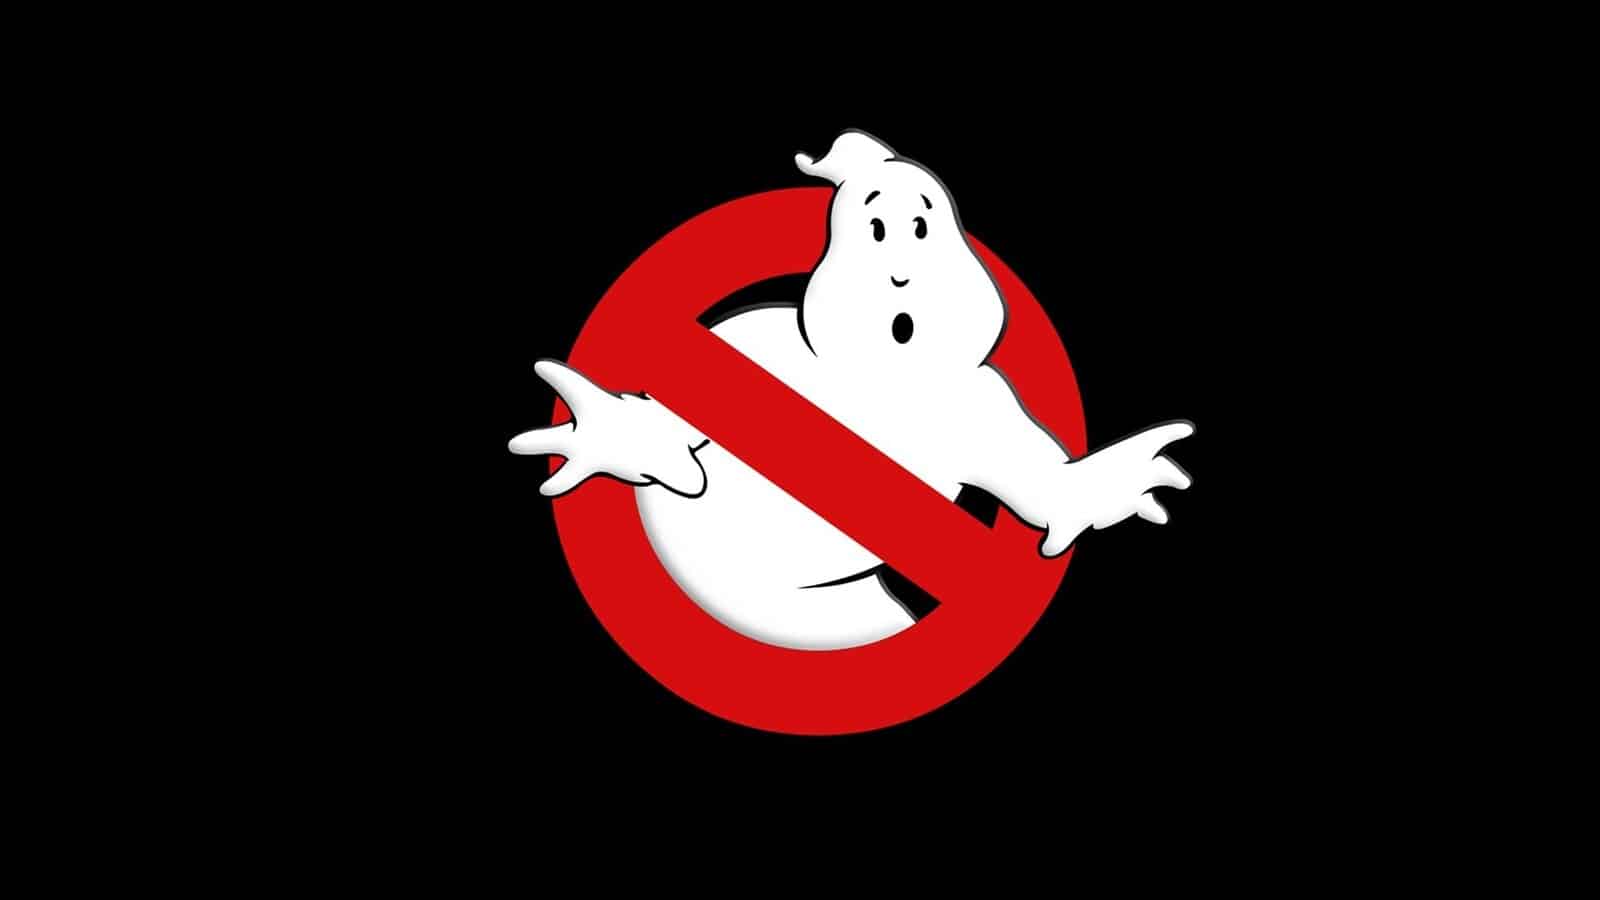 Men's Ghostbusters Movie Logo T-shirt : Target